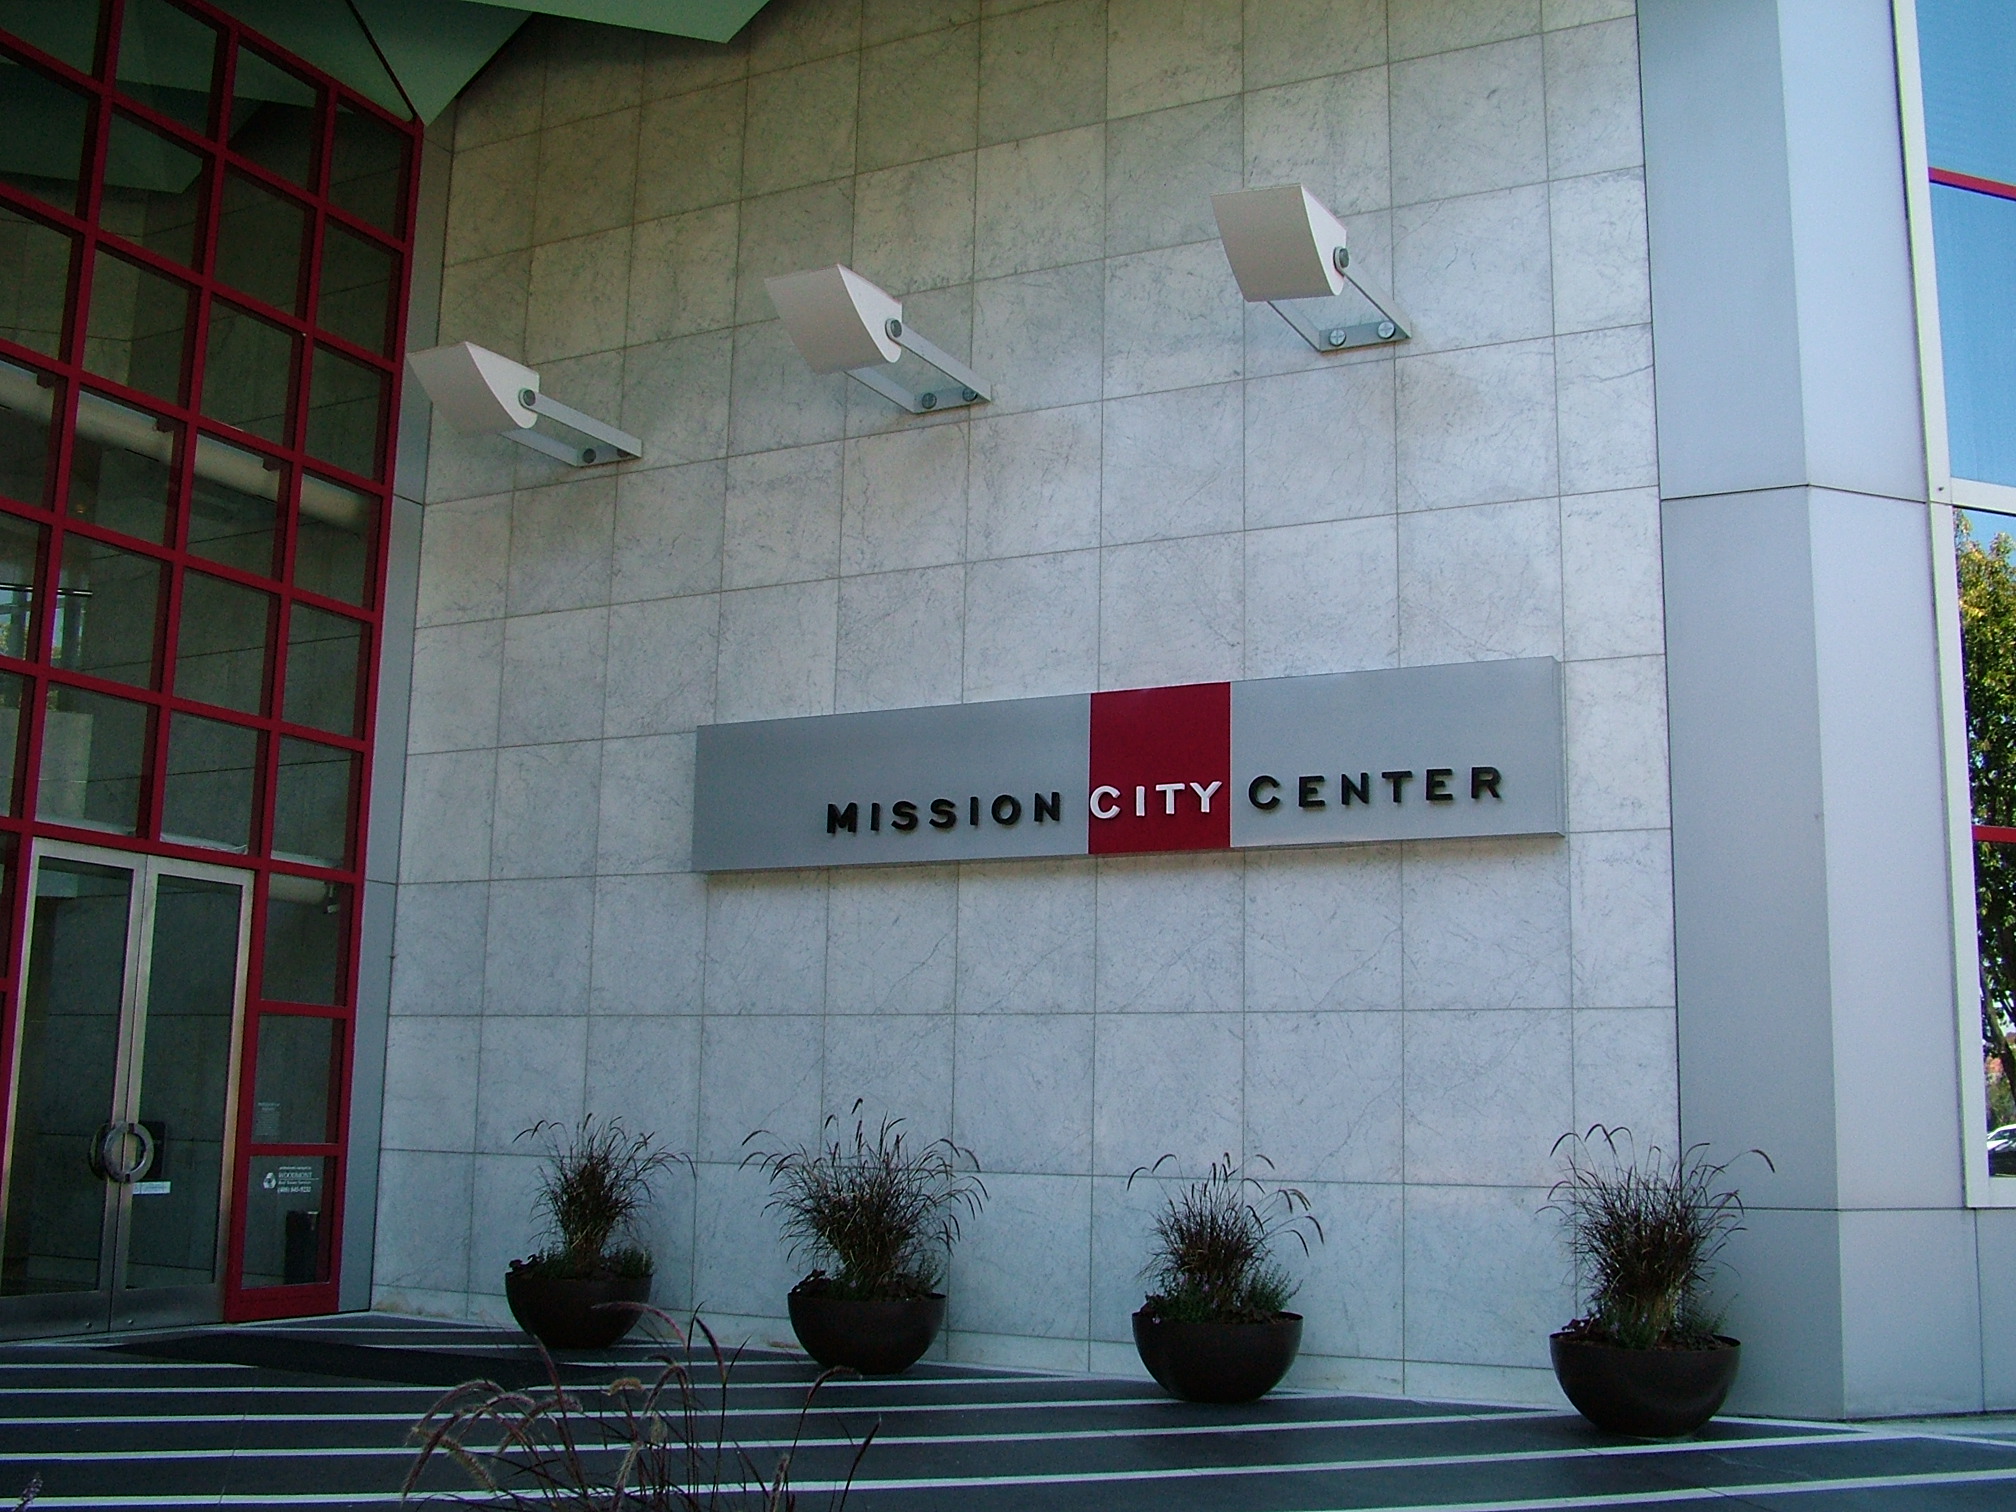 Mission City Center / Wall Sign – Santa Clara, CA